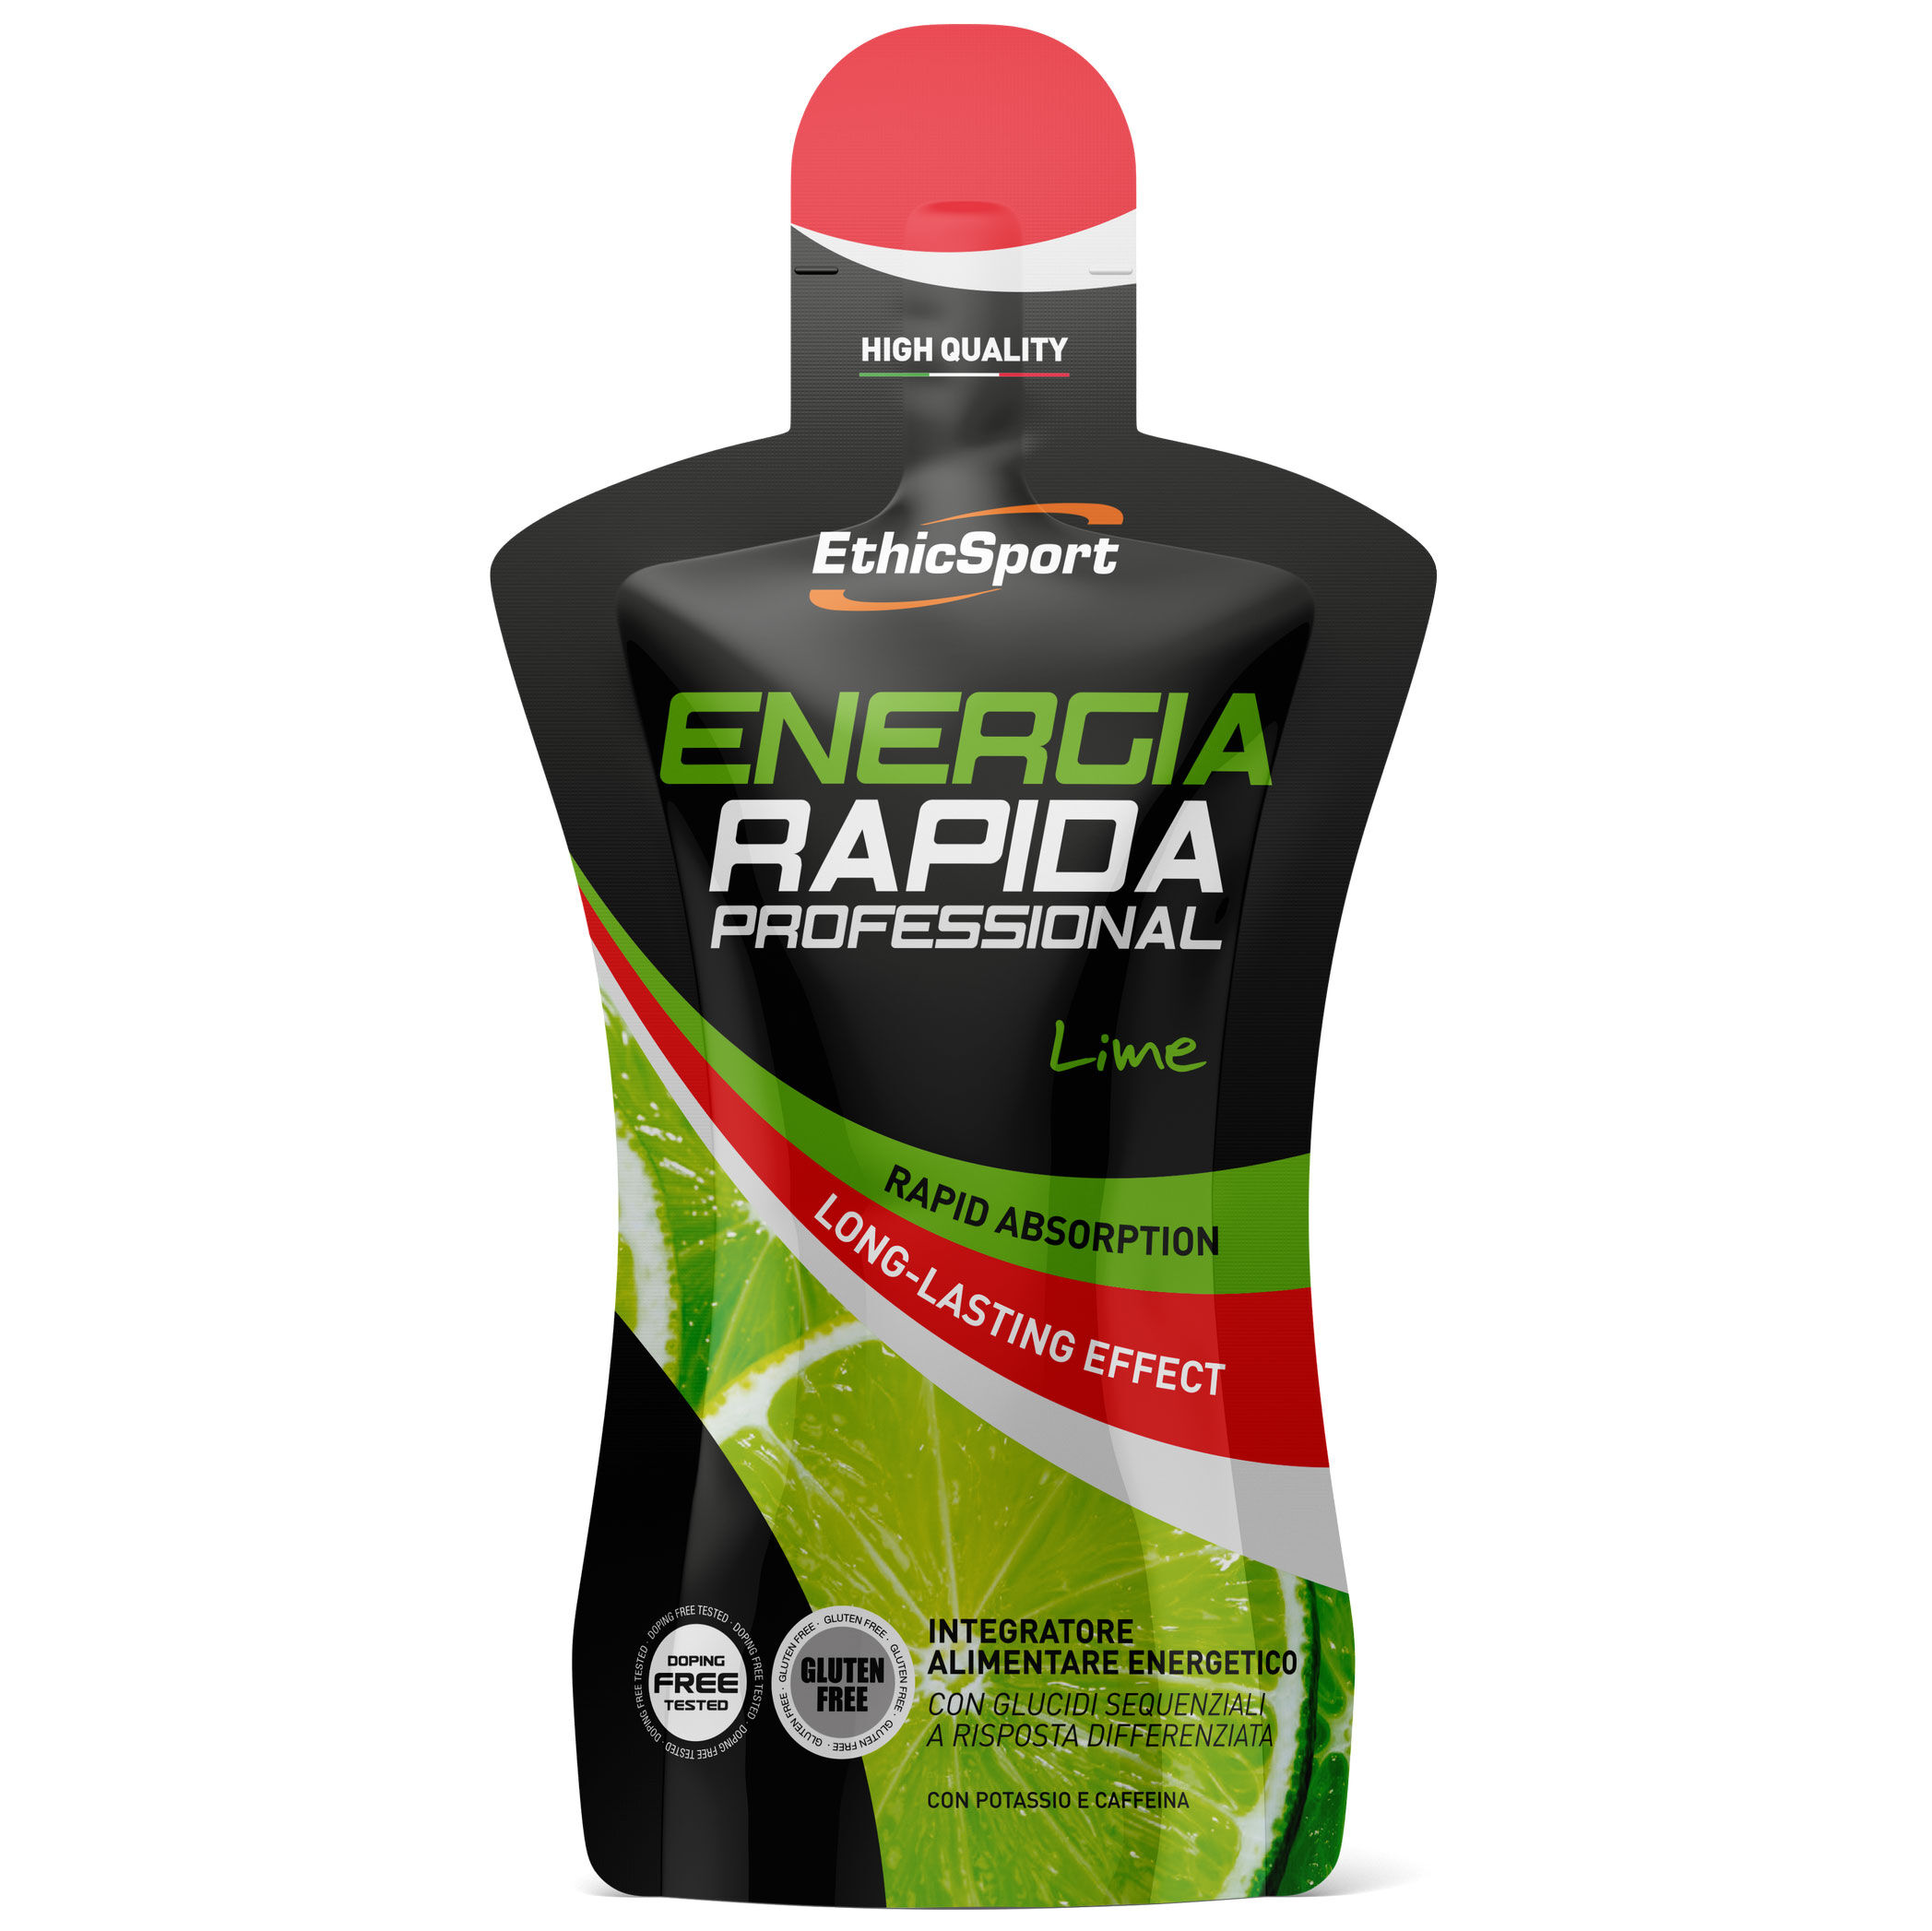 ETHICSPORT ENERGIA RAPIDA PROFESSIONAL Lime - Pack 50 ml.  